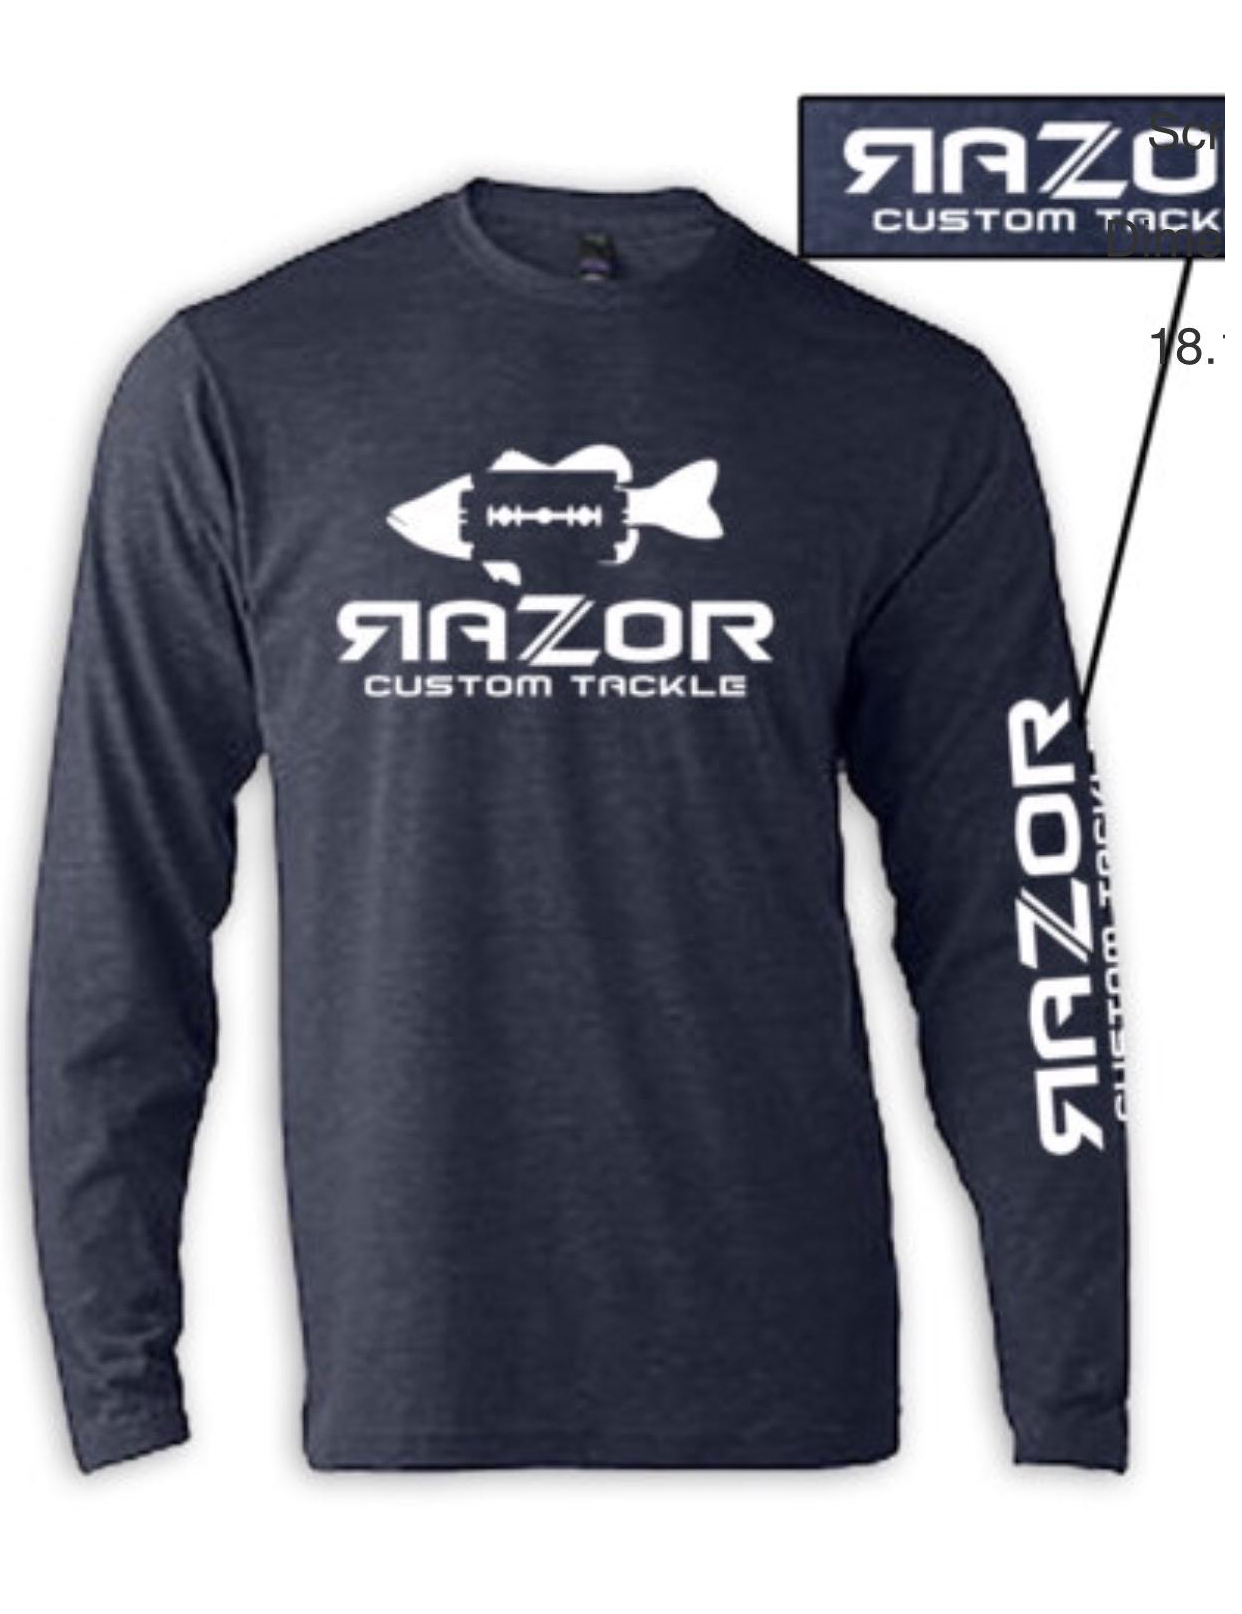 Razor Custom Lures T-shirt Long Sleeve